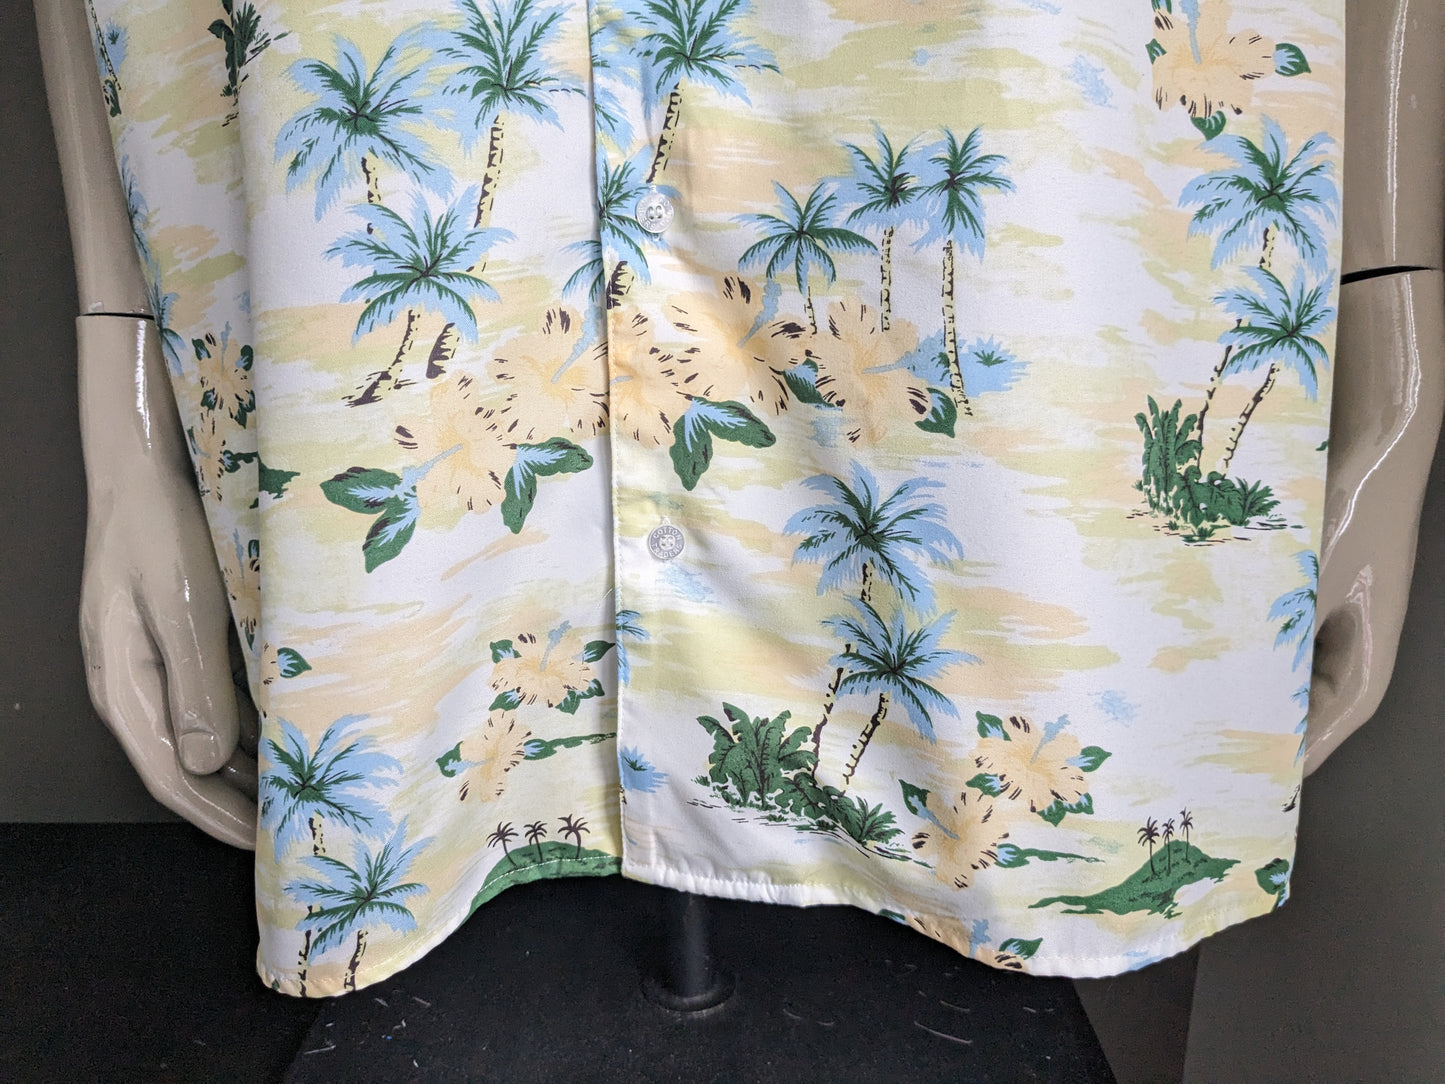 Trader di cotone Hawaii Shirt manica corta. Stampa gialla blu verde. Dimensione 4xl / xxxxl.